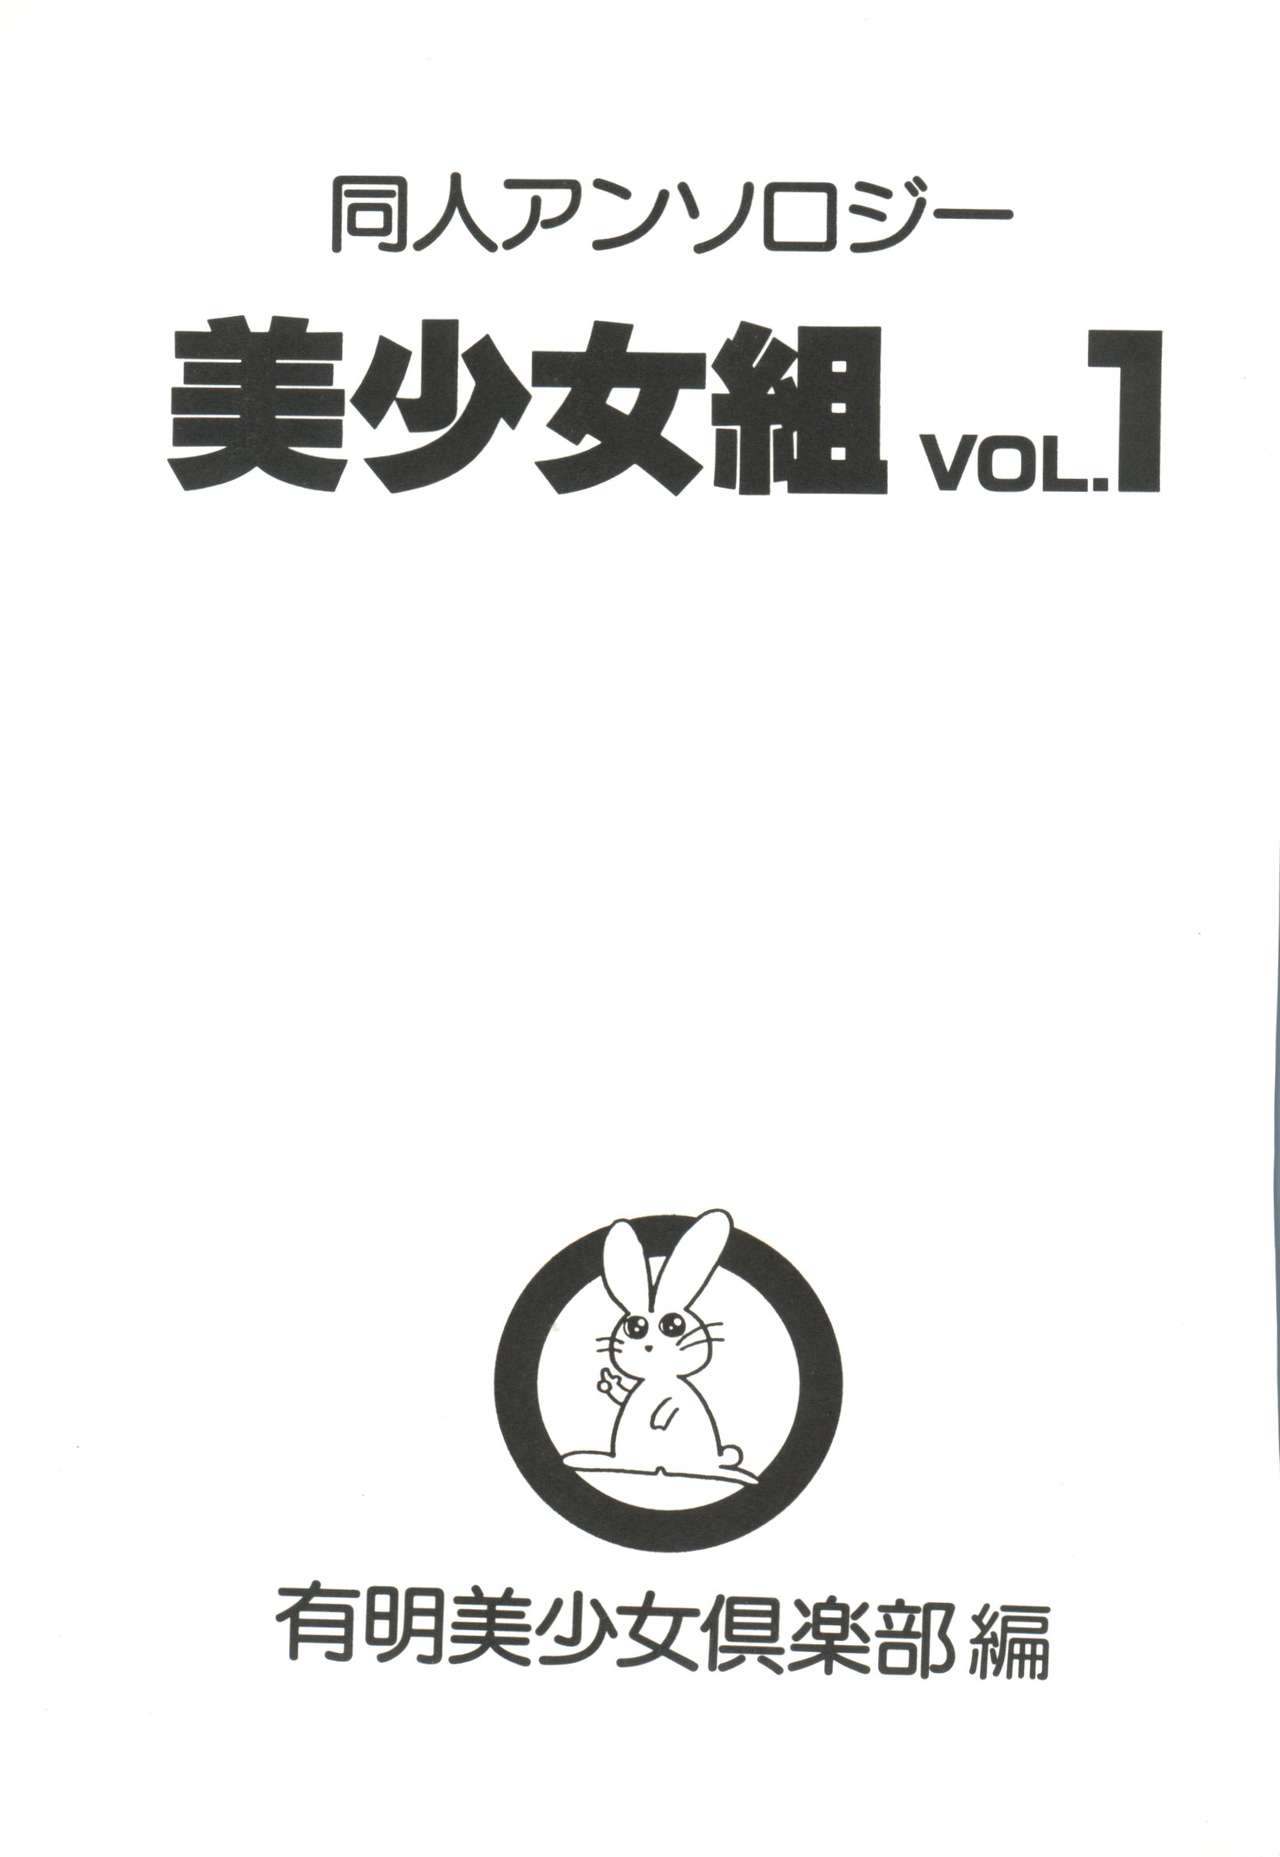 [Anthology] Doujin Anthology Bishoujo Gumi 1 (Various) [アンソロジー] 同人アンソロジー美少女組1 (よろず)